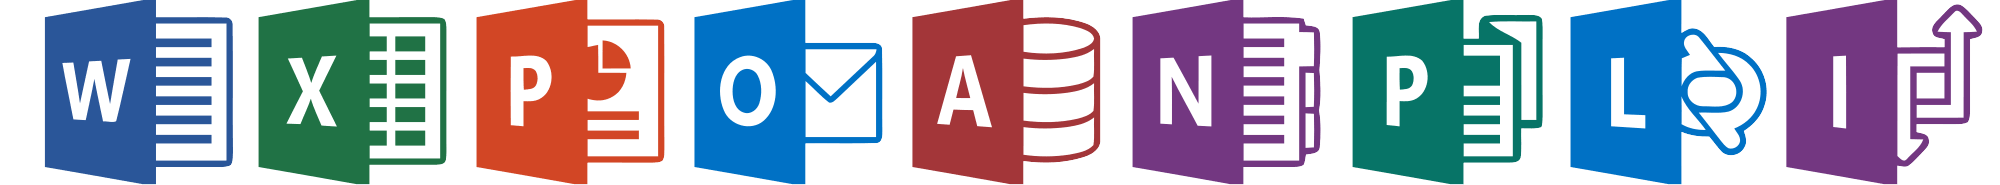 Microsoft Office 2013 Logo - Microsoft Office 2013 logos lineup.svg